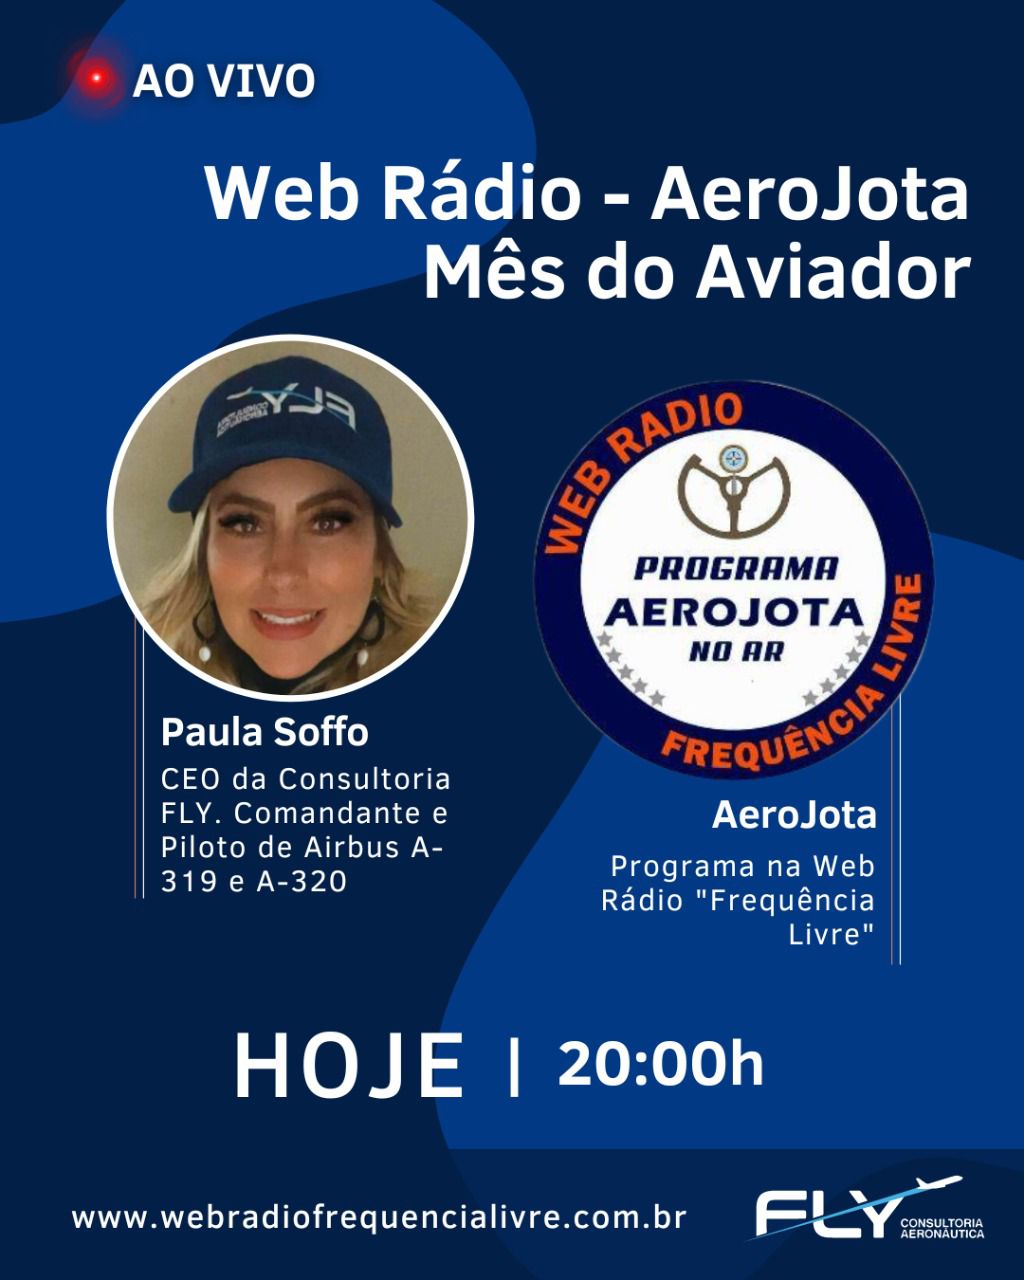 Web Radio - AeroJota - Mes do Aviador